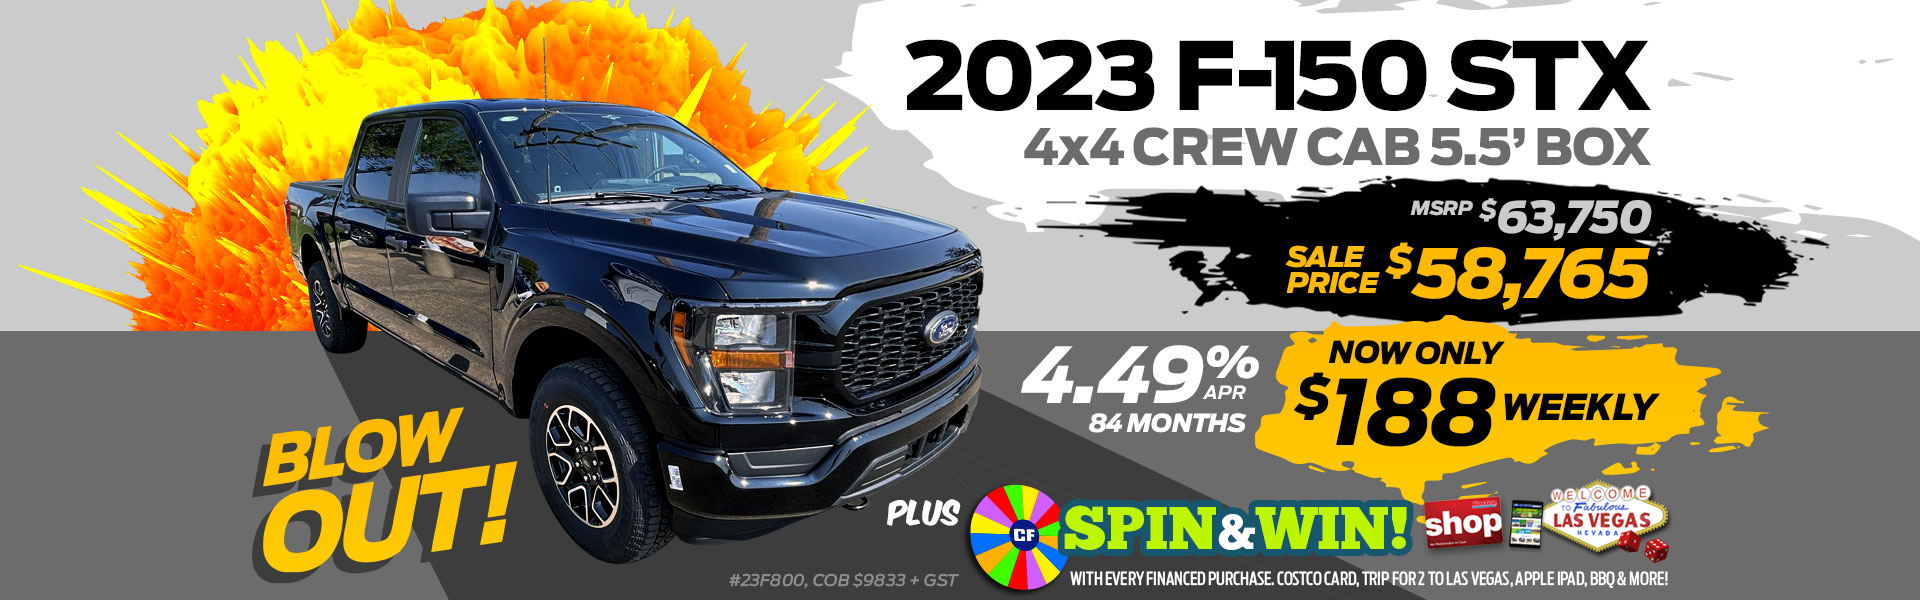 2023 F-150 STX CREW CAB 4x4 SALE!